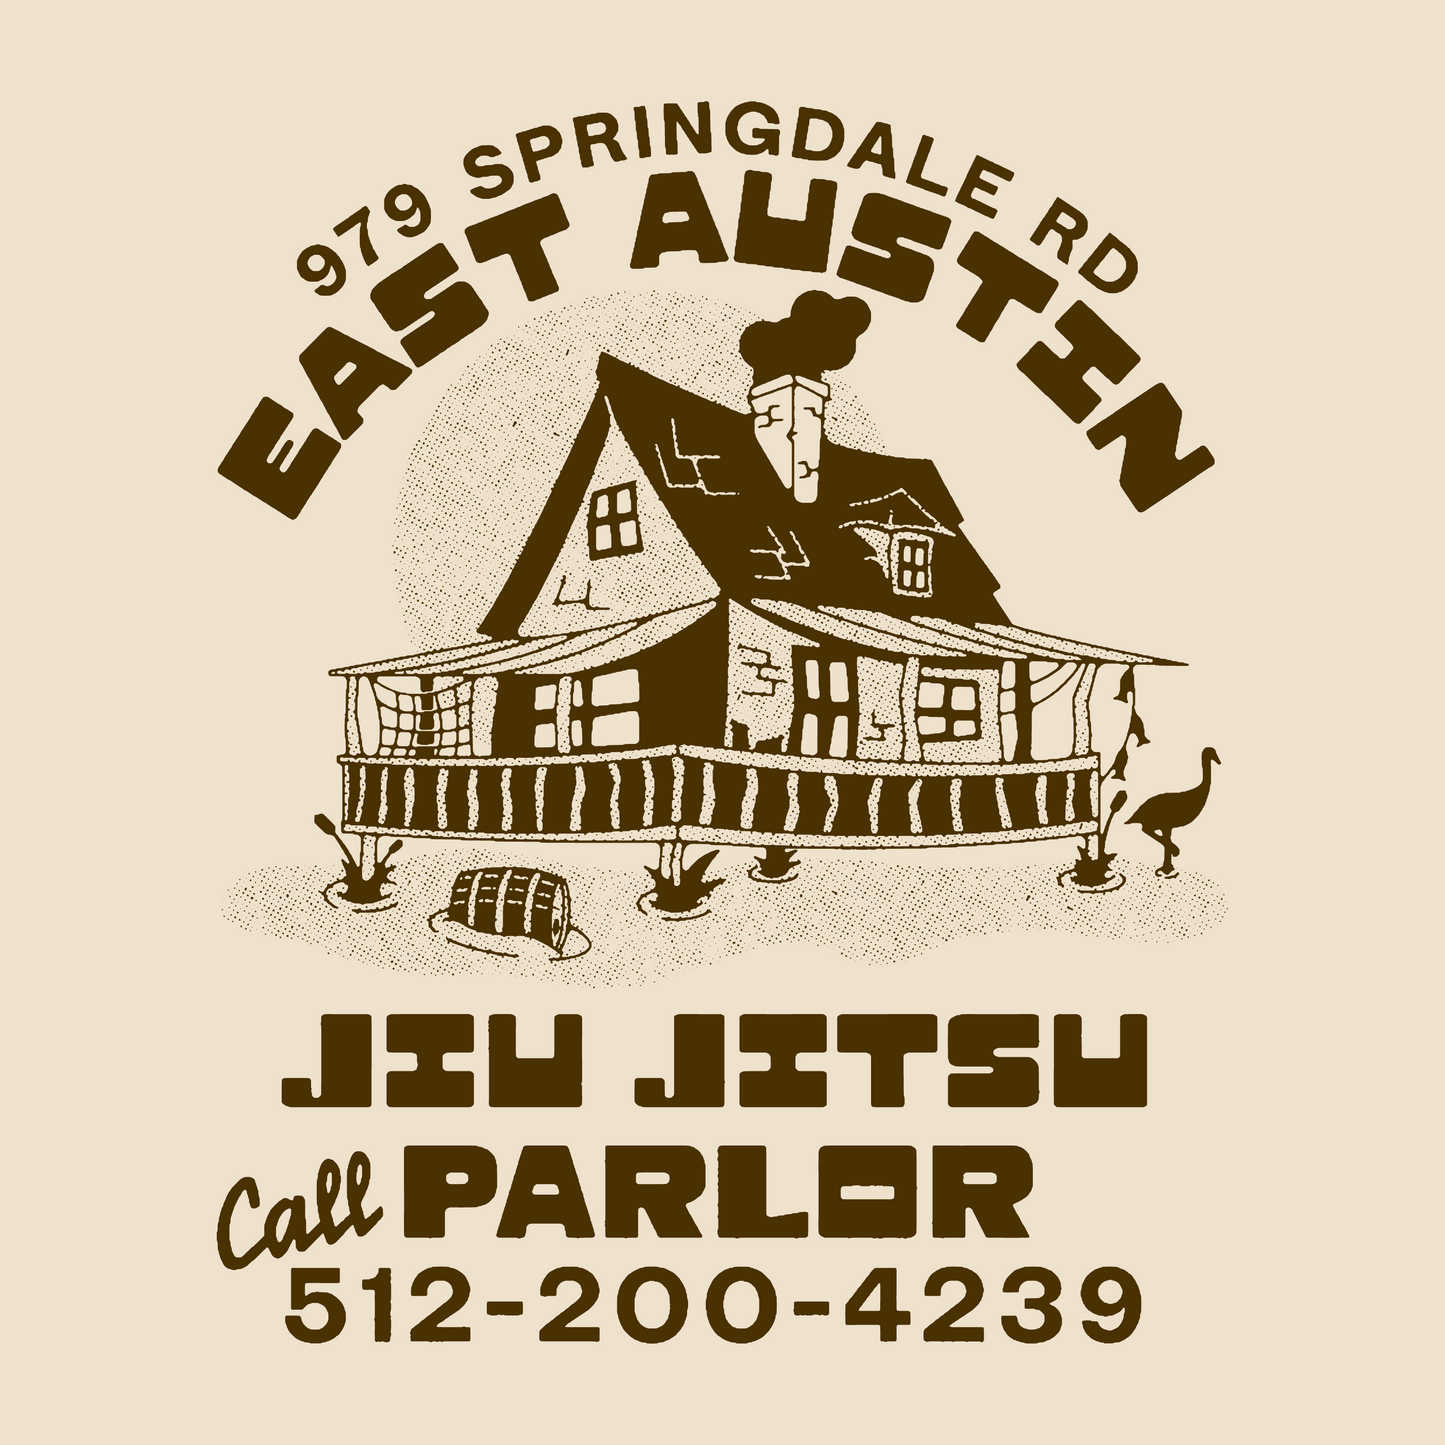 East Austin Jiujitsu Parlor Shirt